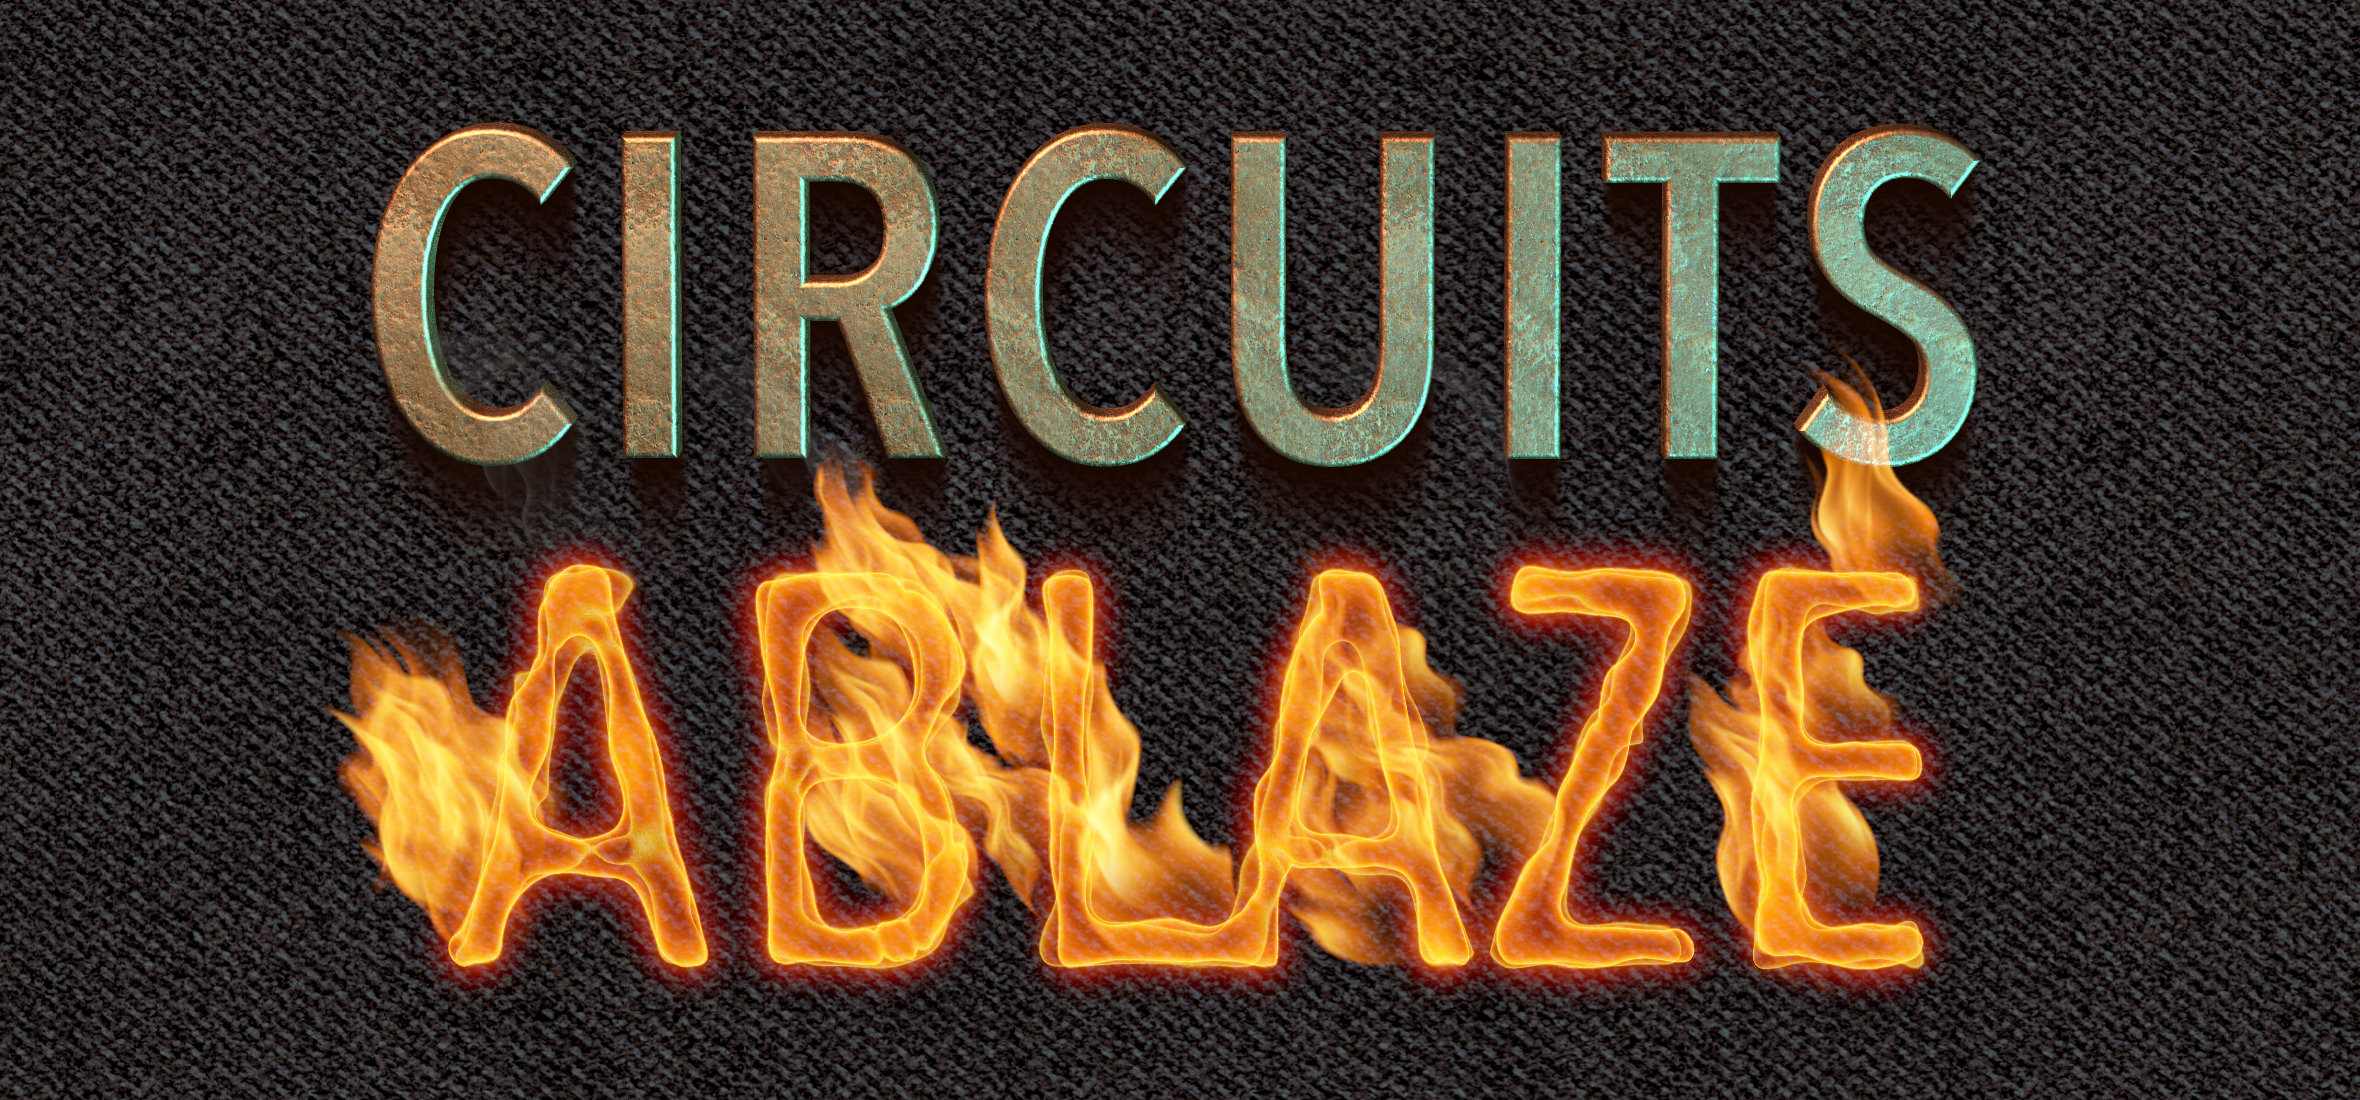 Circuits Ablaze